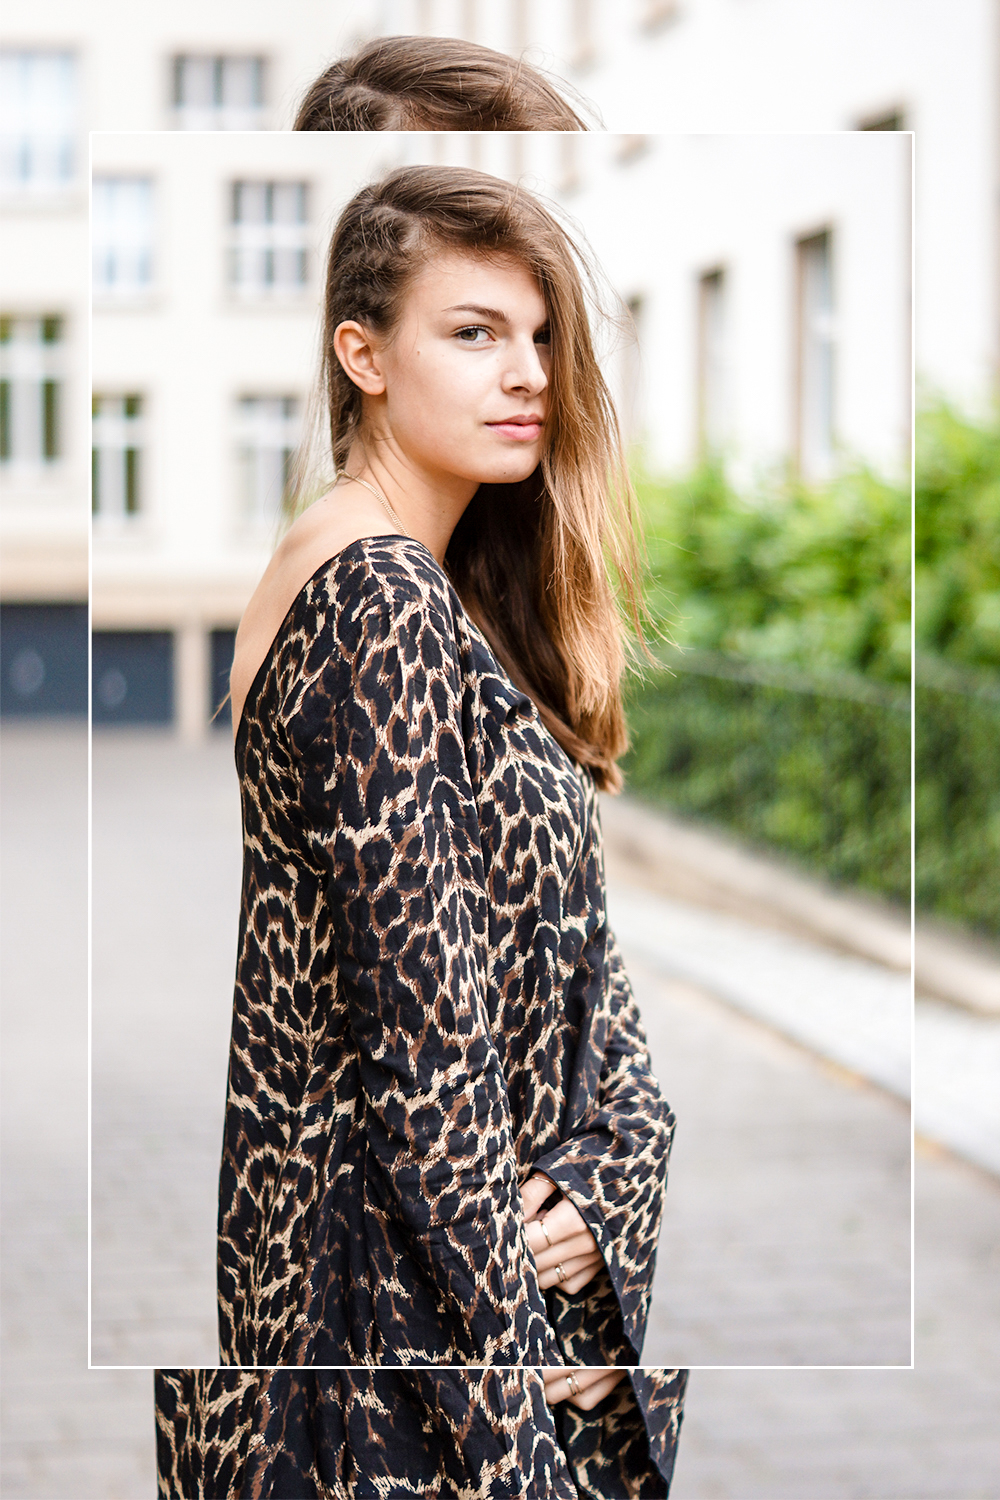 How to wear Leopard Print